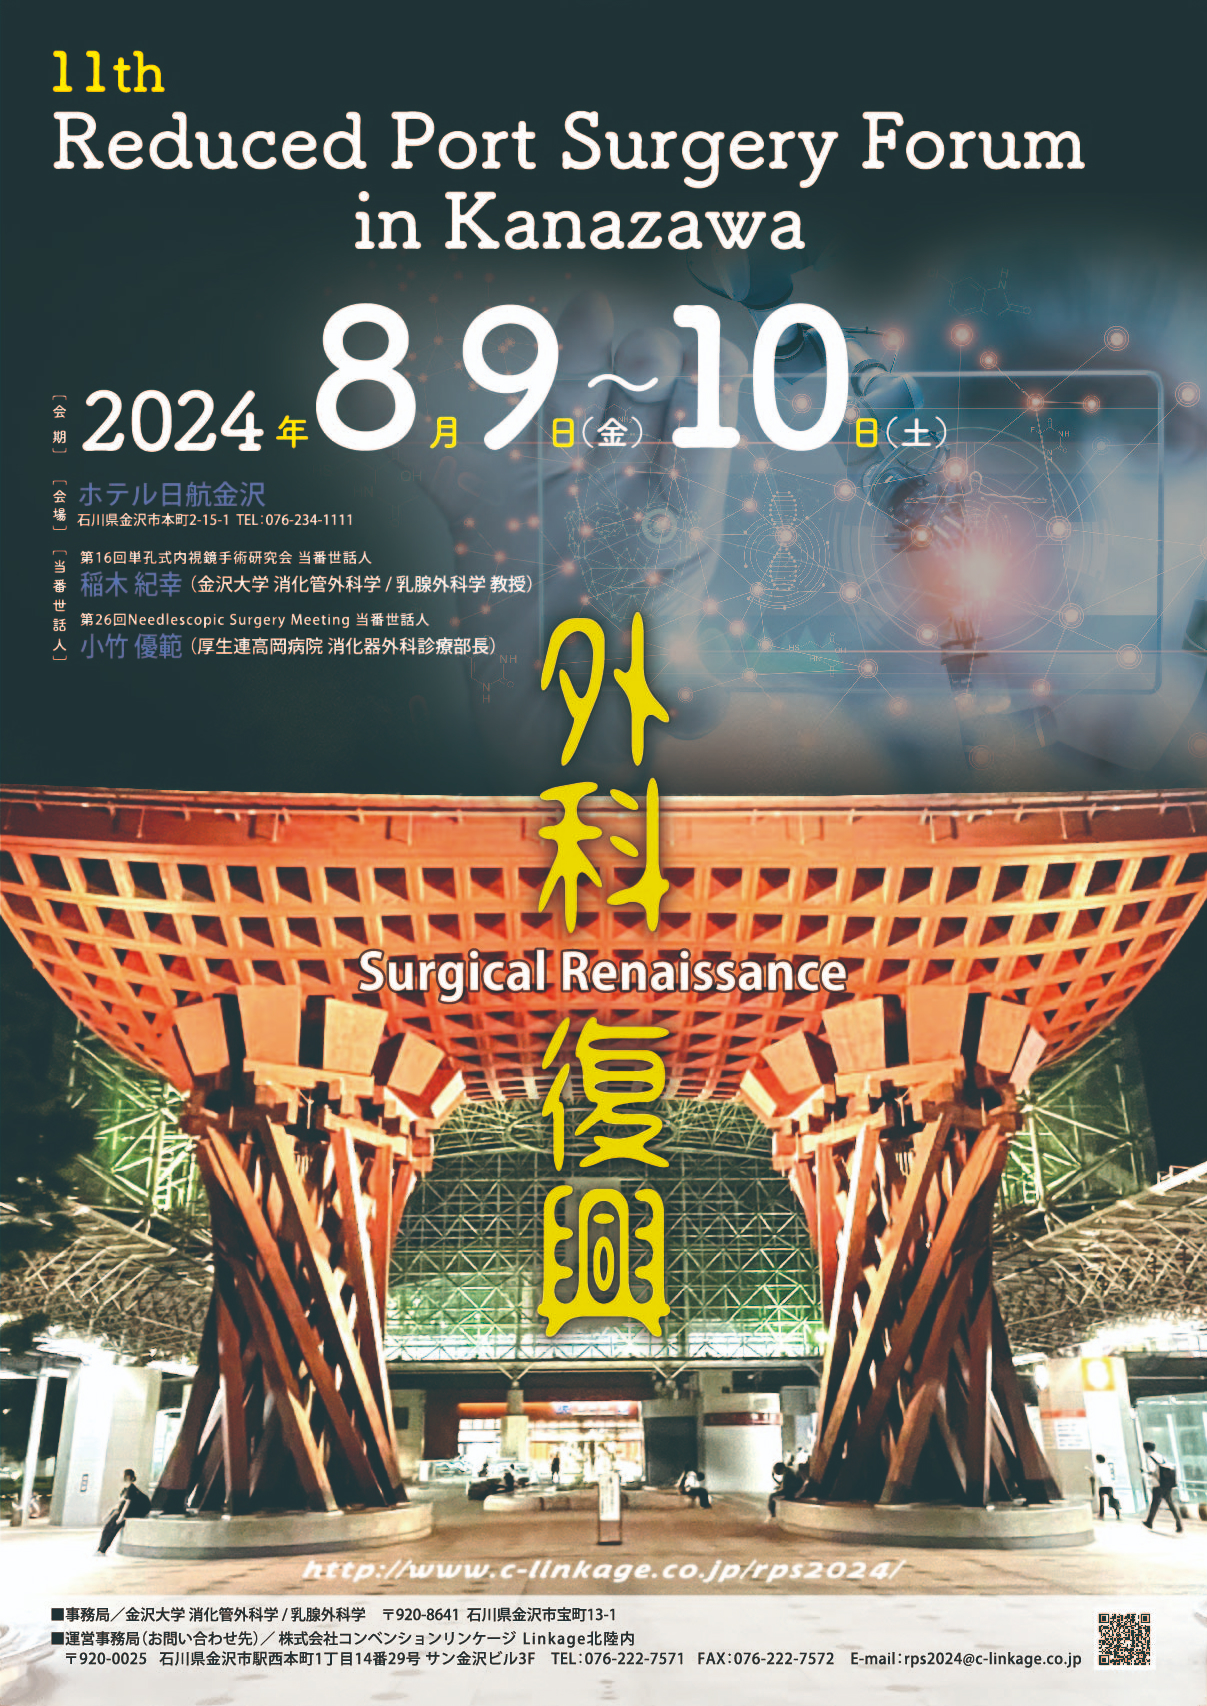 11th Reduced Port Surgery Forum in Kanazawa japan, August 9 - 10 ,2024 Hotel nikko Kanazawa, Tokyo, JAPAN